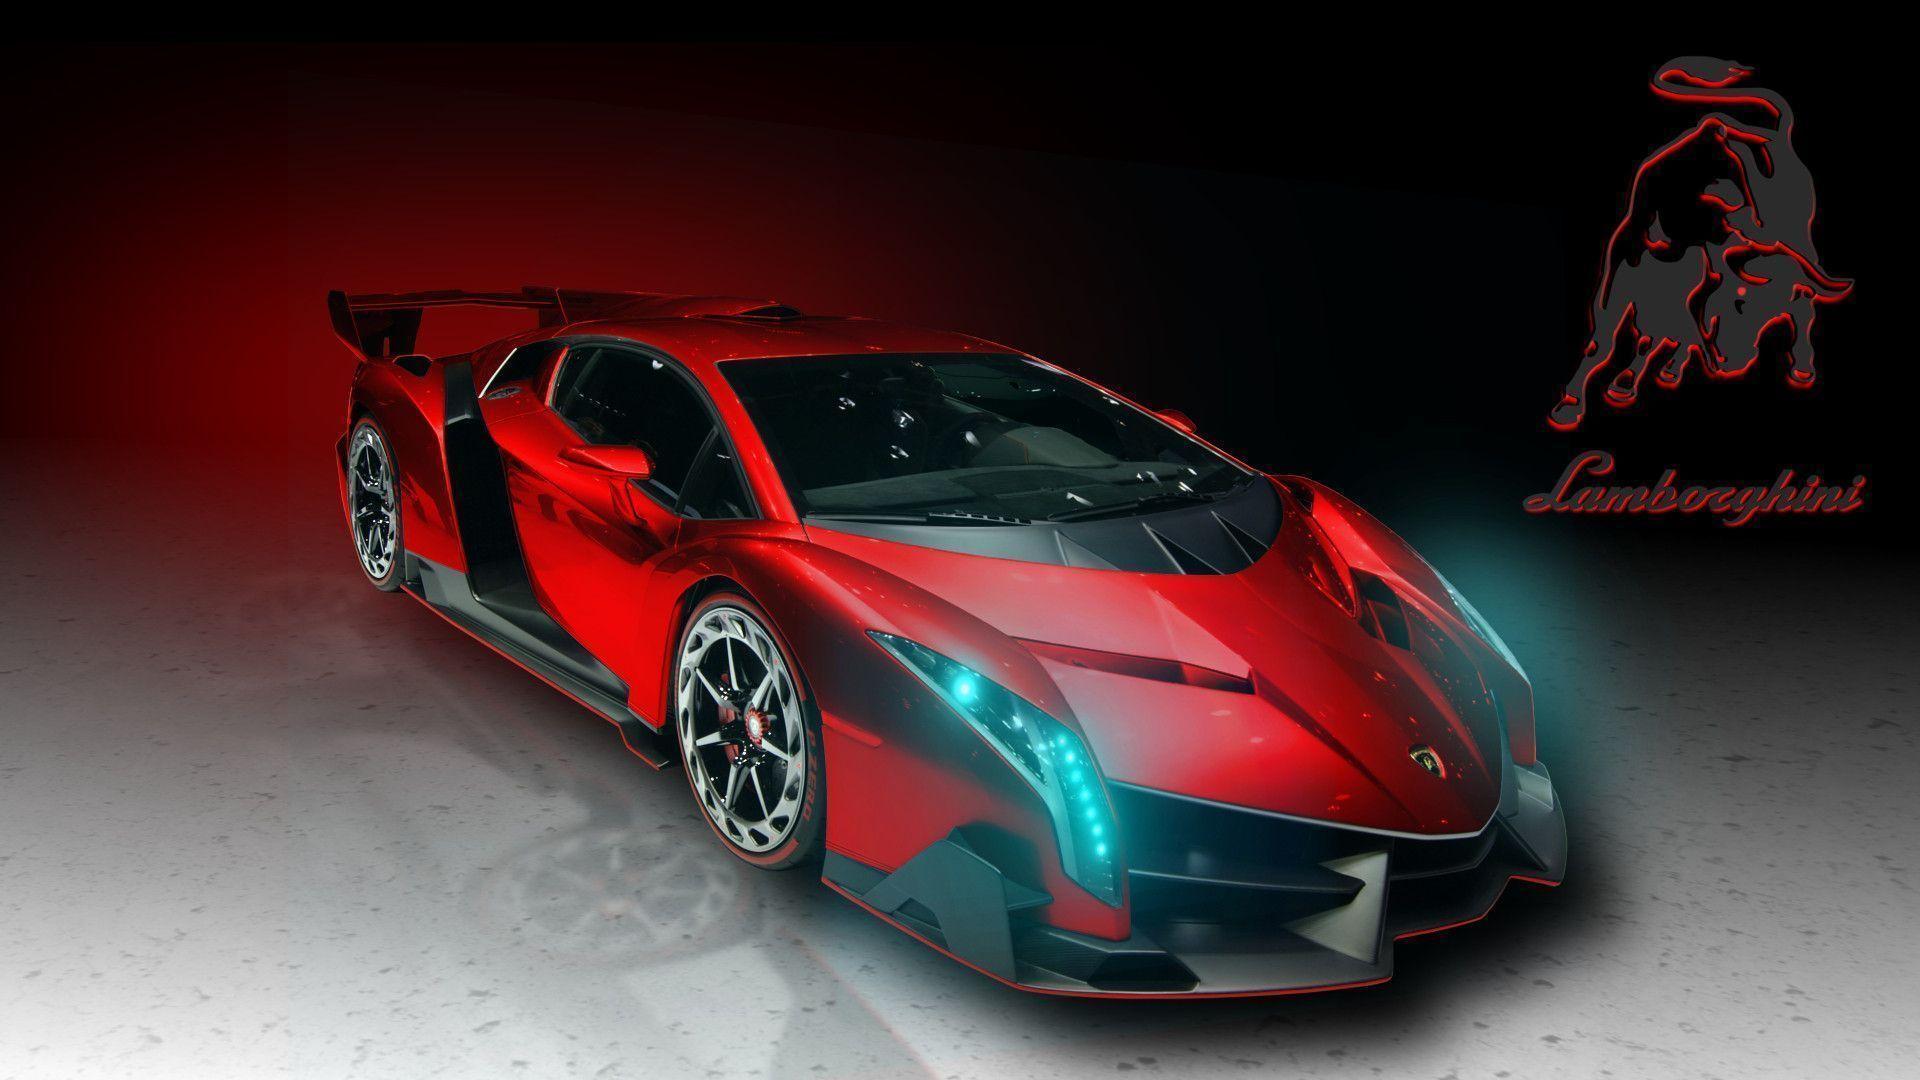 Wallpapers Full HD 1080p Lamborghini New 2015 - Wallpaper Cave